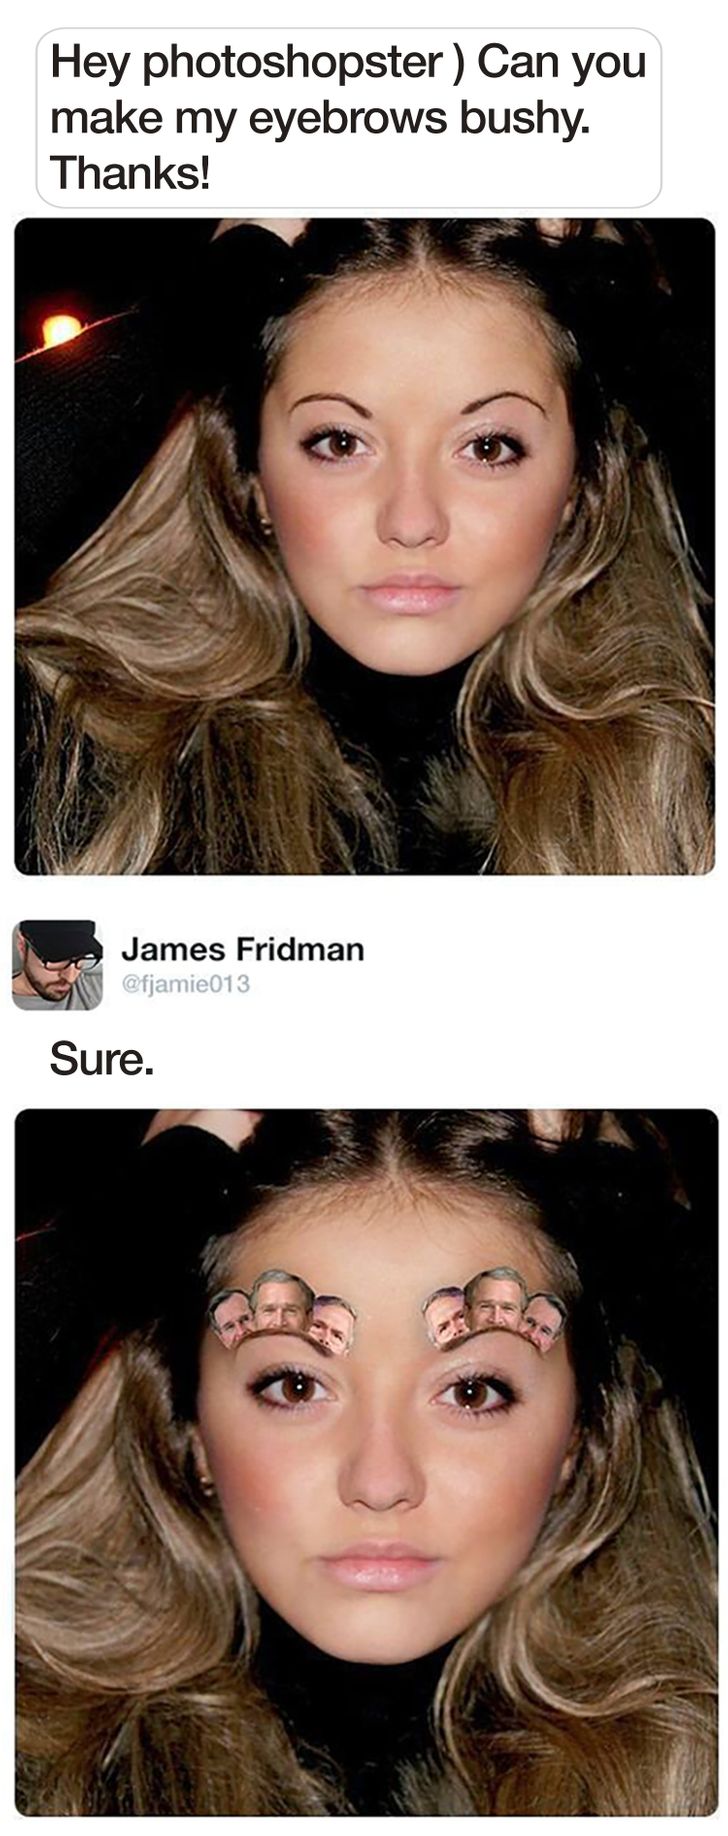 james fridman photoshop trolls - Hey photoshopster Can you make my eyebrows bushy. Thanks! James Fridman Sure.